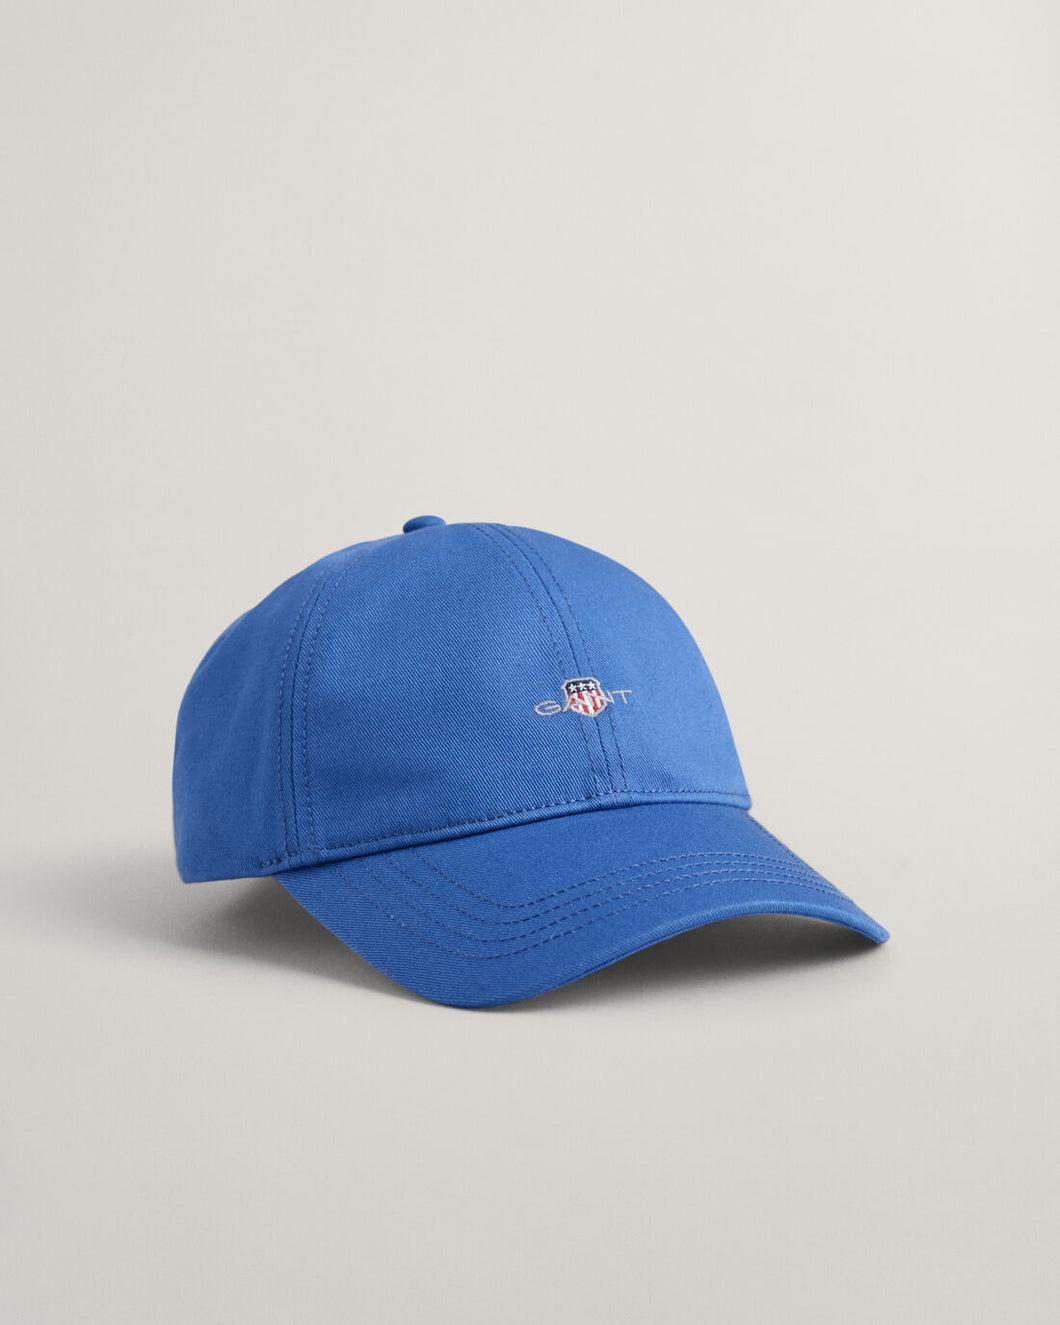 GANT - Shield Cap, Rich Blue